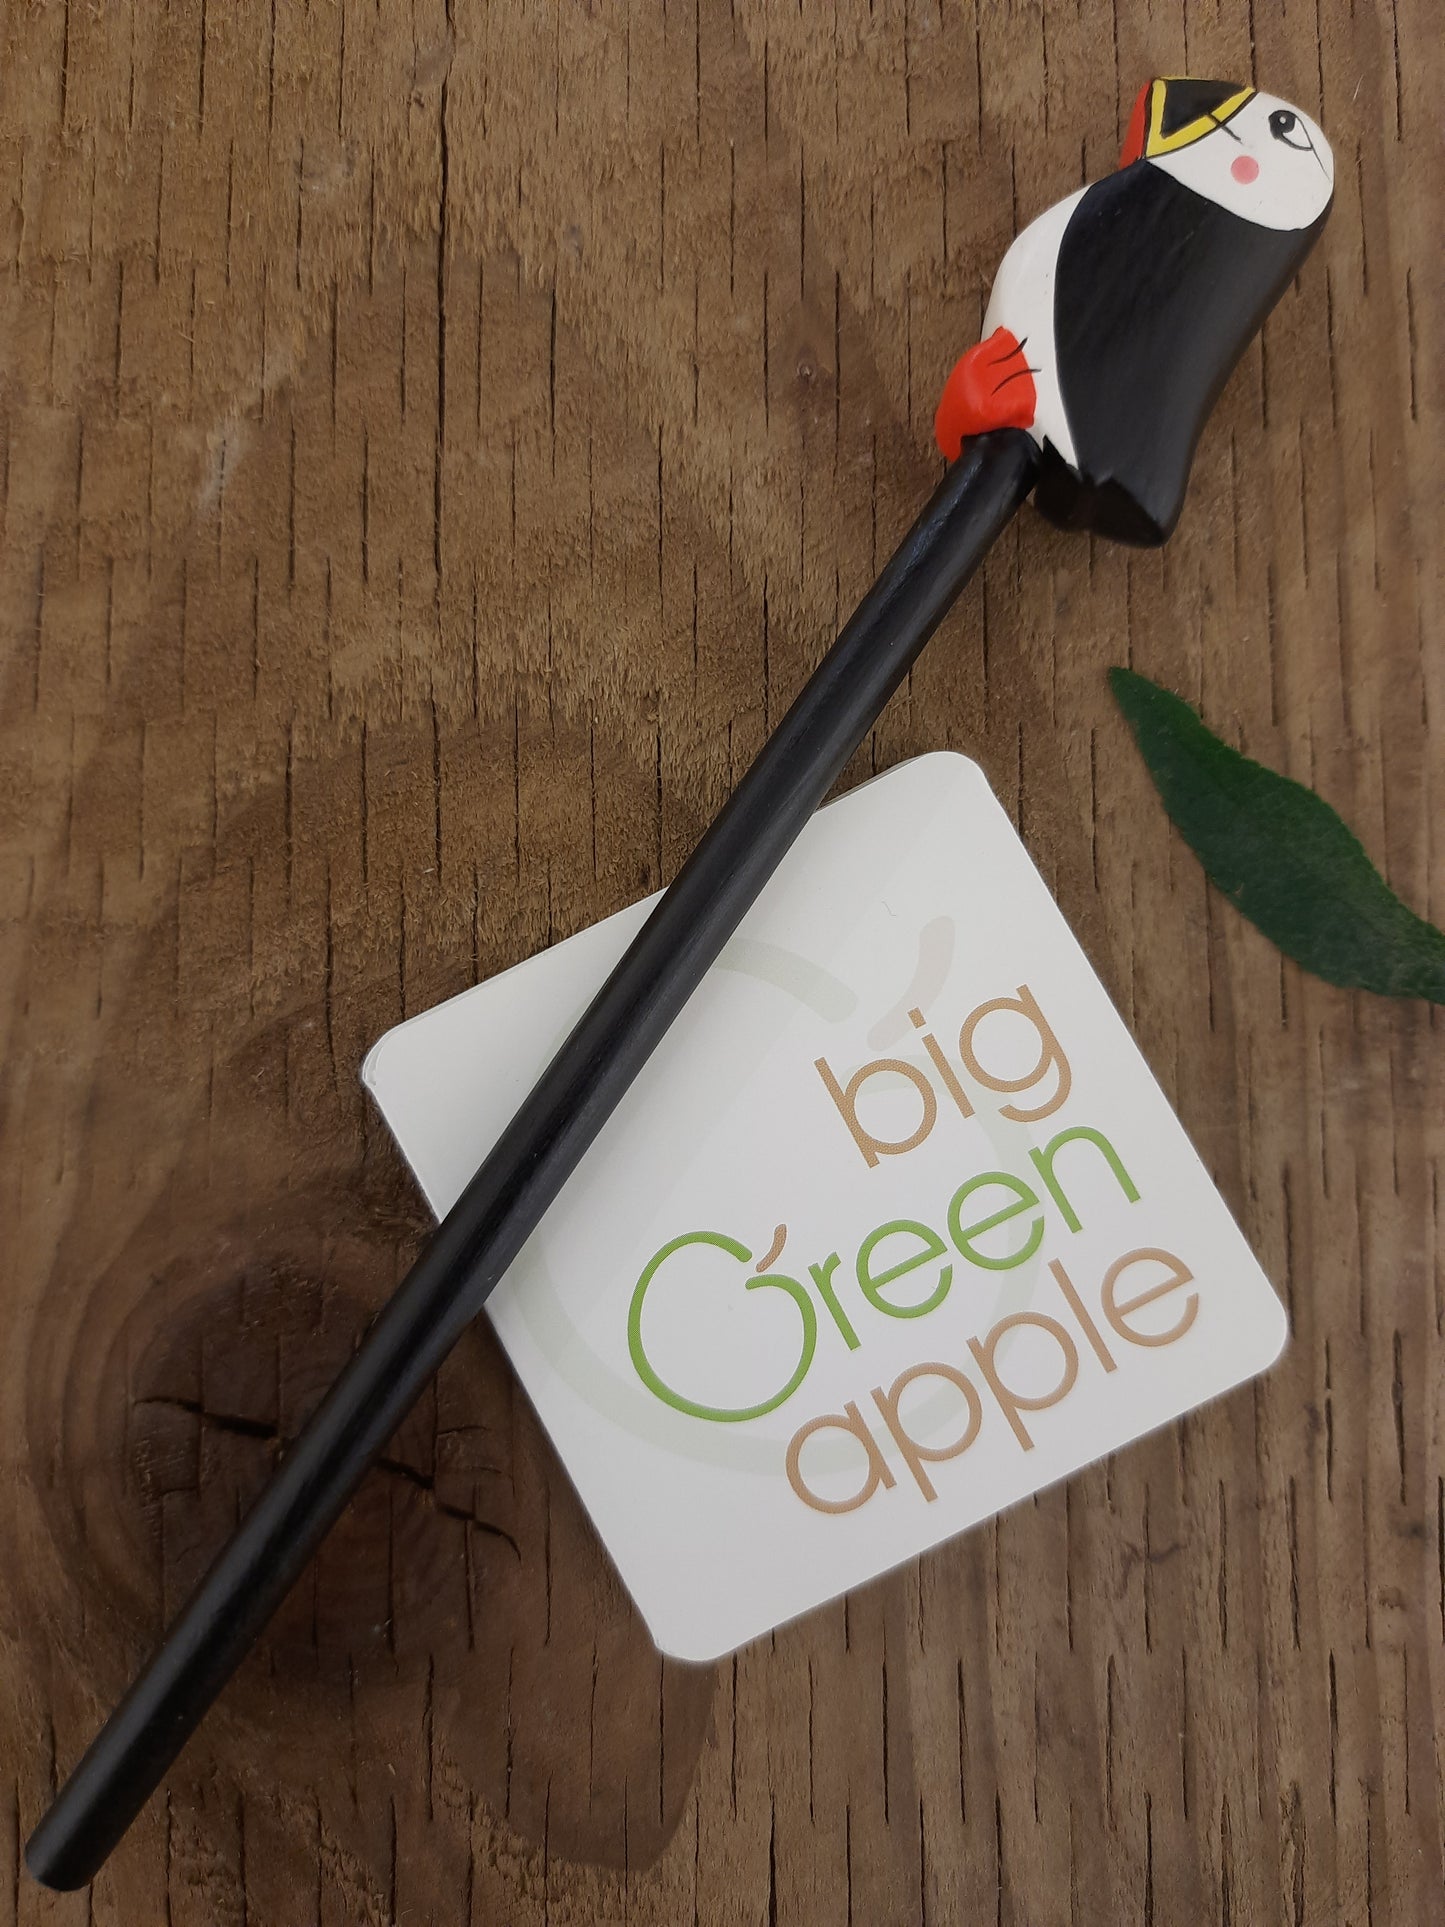 Fair trade uk products, fair trade wooden pencil, big green apple